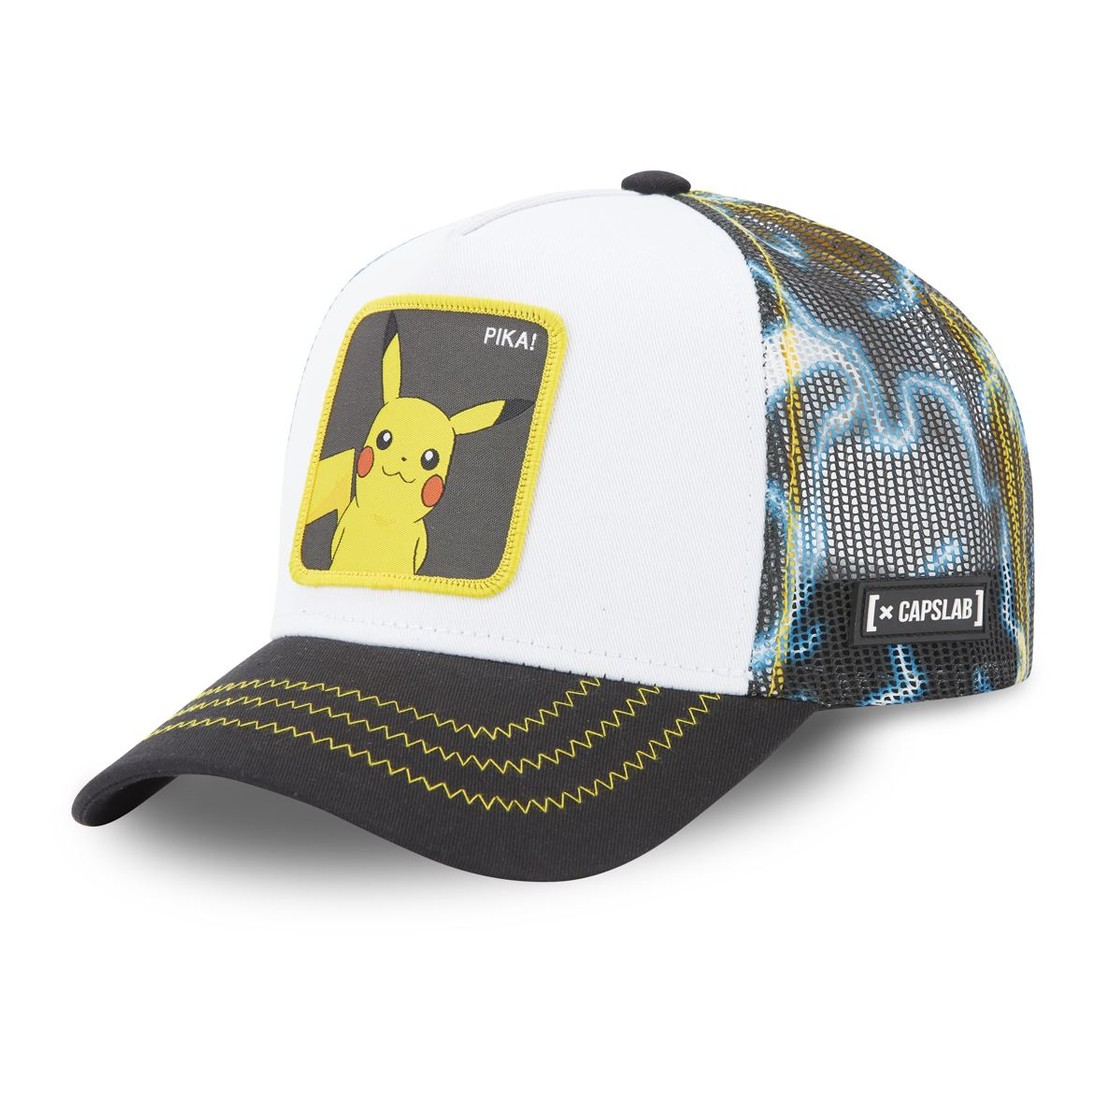 Capslab Pokemon Pikachu 2 Unisex Adults' Trucker Cap - Yellow